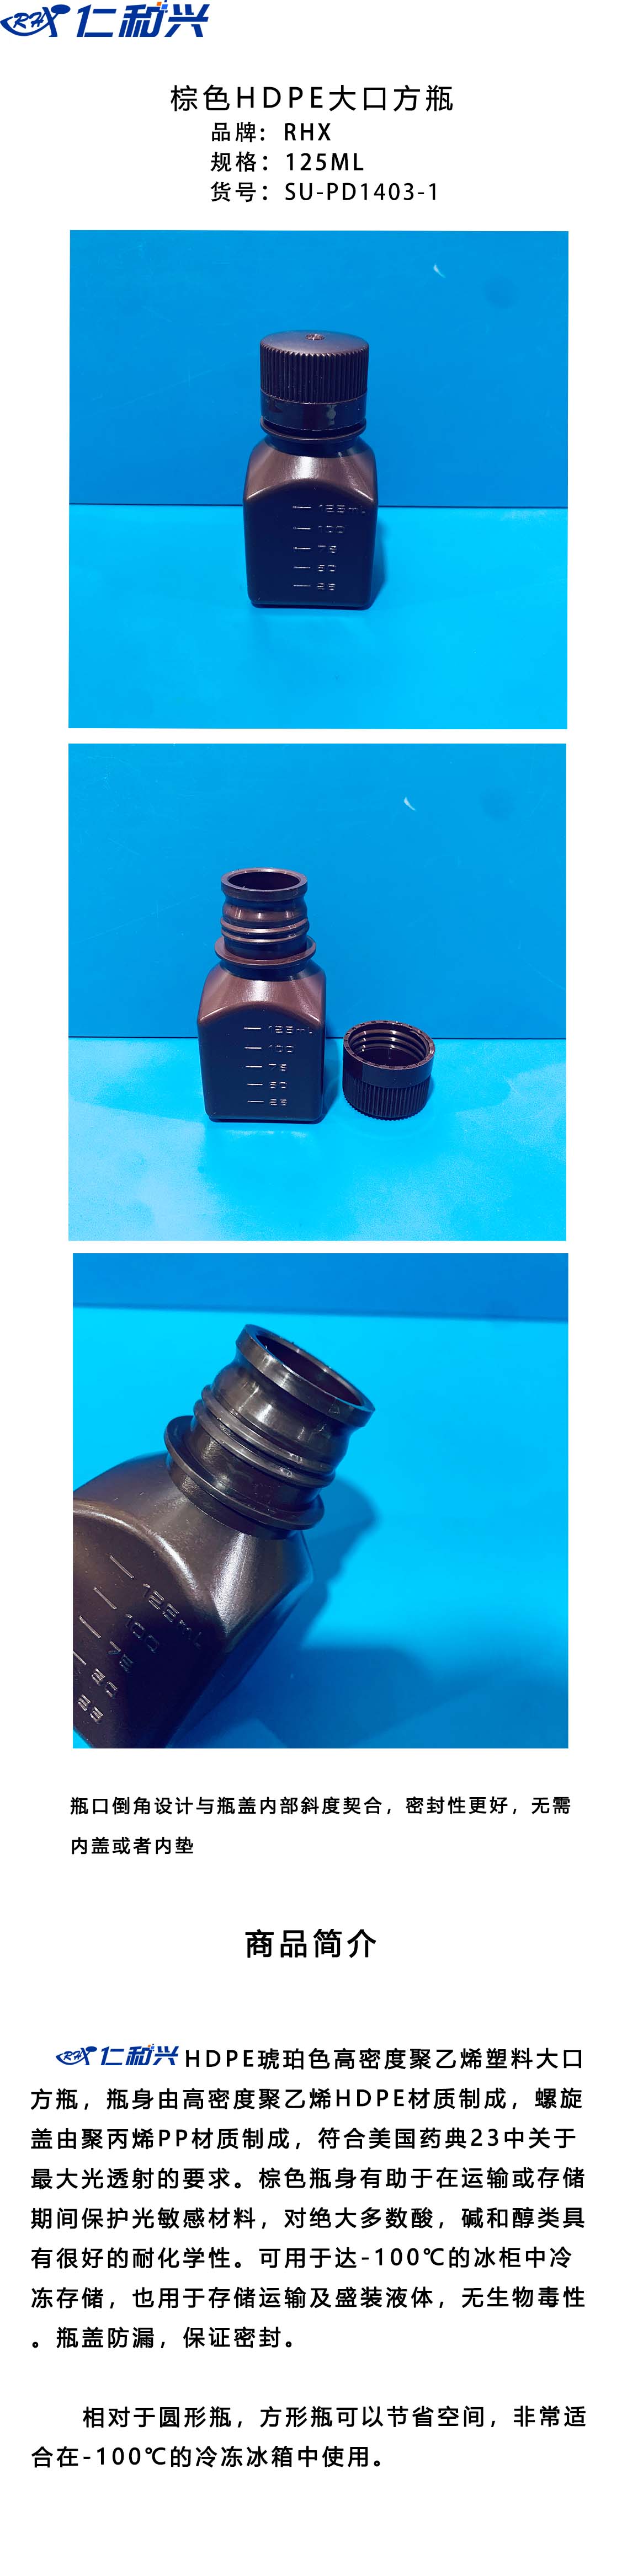 SU-PD1403-1 棕色HDPE大口方瓶长图模板.jpg